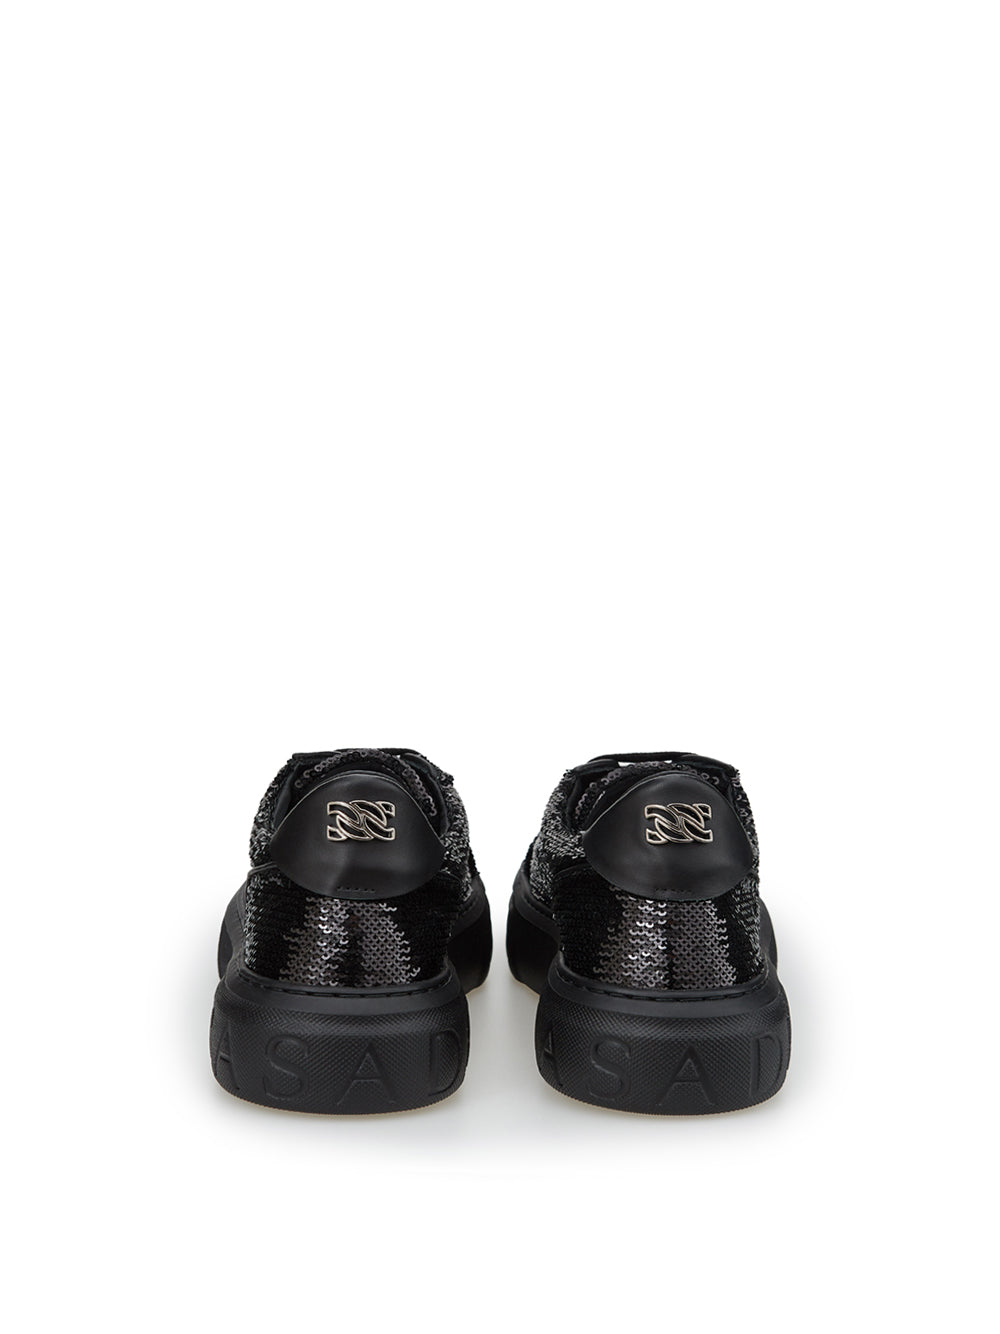 Fashionsarah.com Fashionsarah.com Casadei Black Sequins Off-Road Sneakers